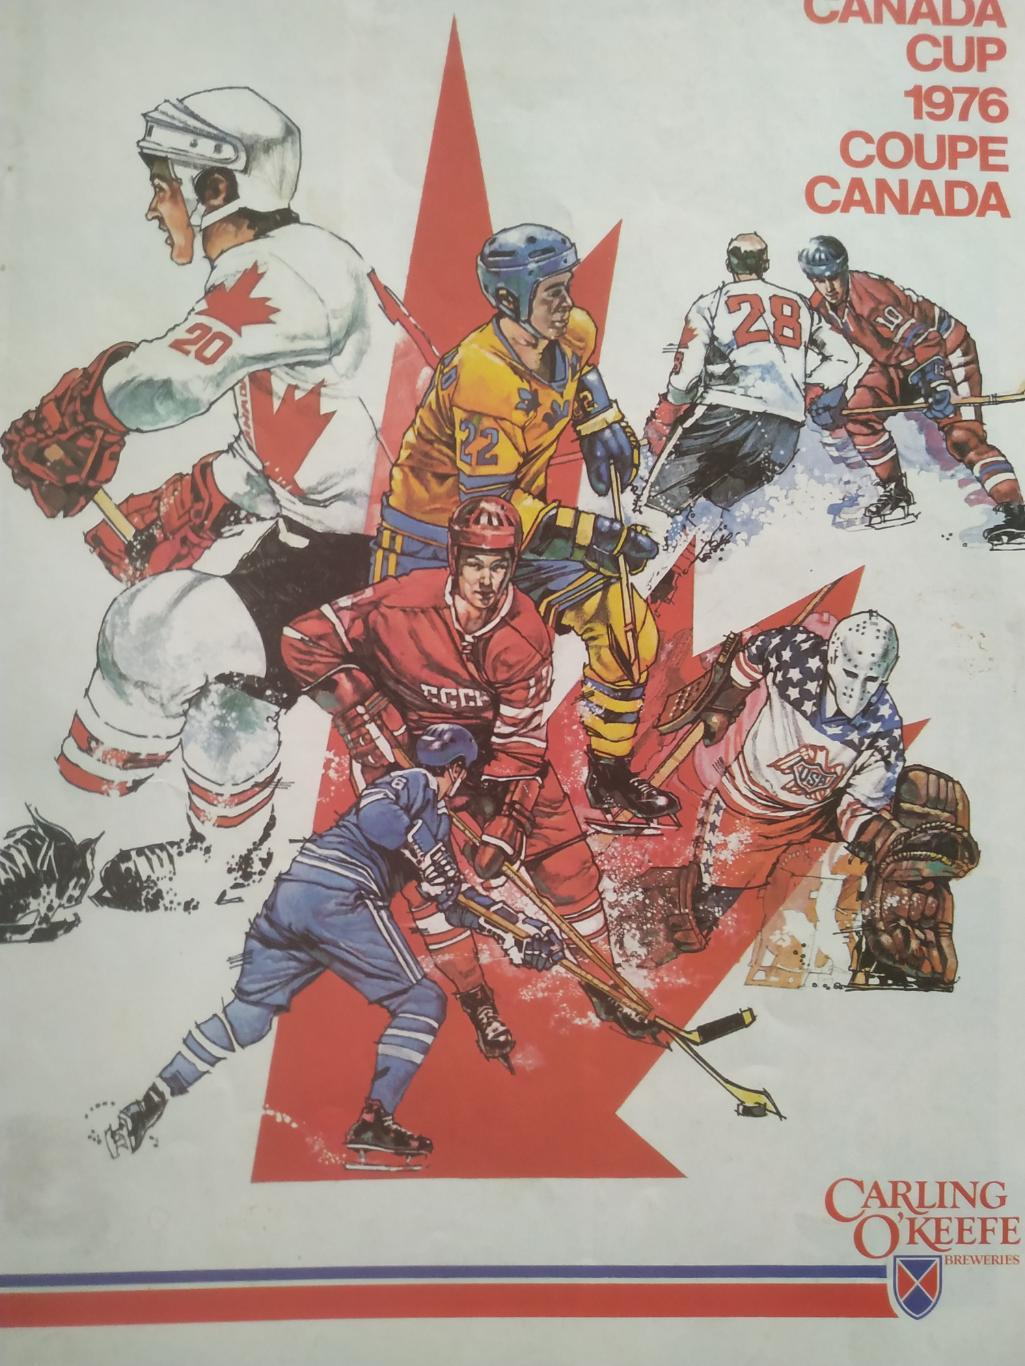 ХОККЕЙ ПРОГРАММА МАТЧА НХЛ КУБОК КАНАДЫ NHL 1976 CANADA CUP OFFICIAL PROGRAM